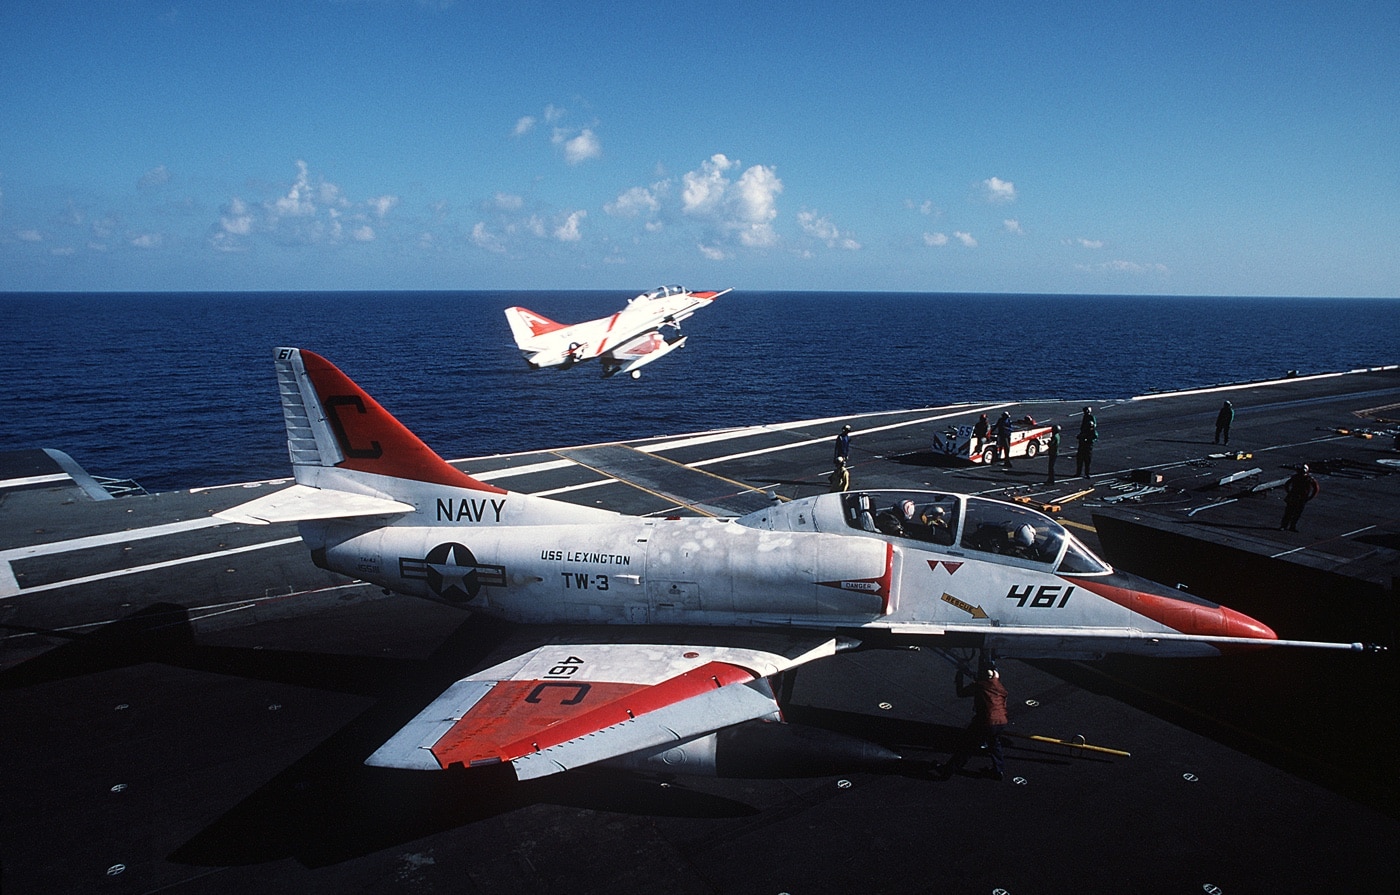 a-4 skyhawk on the deck of the uss lexington aircraft carrier